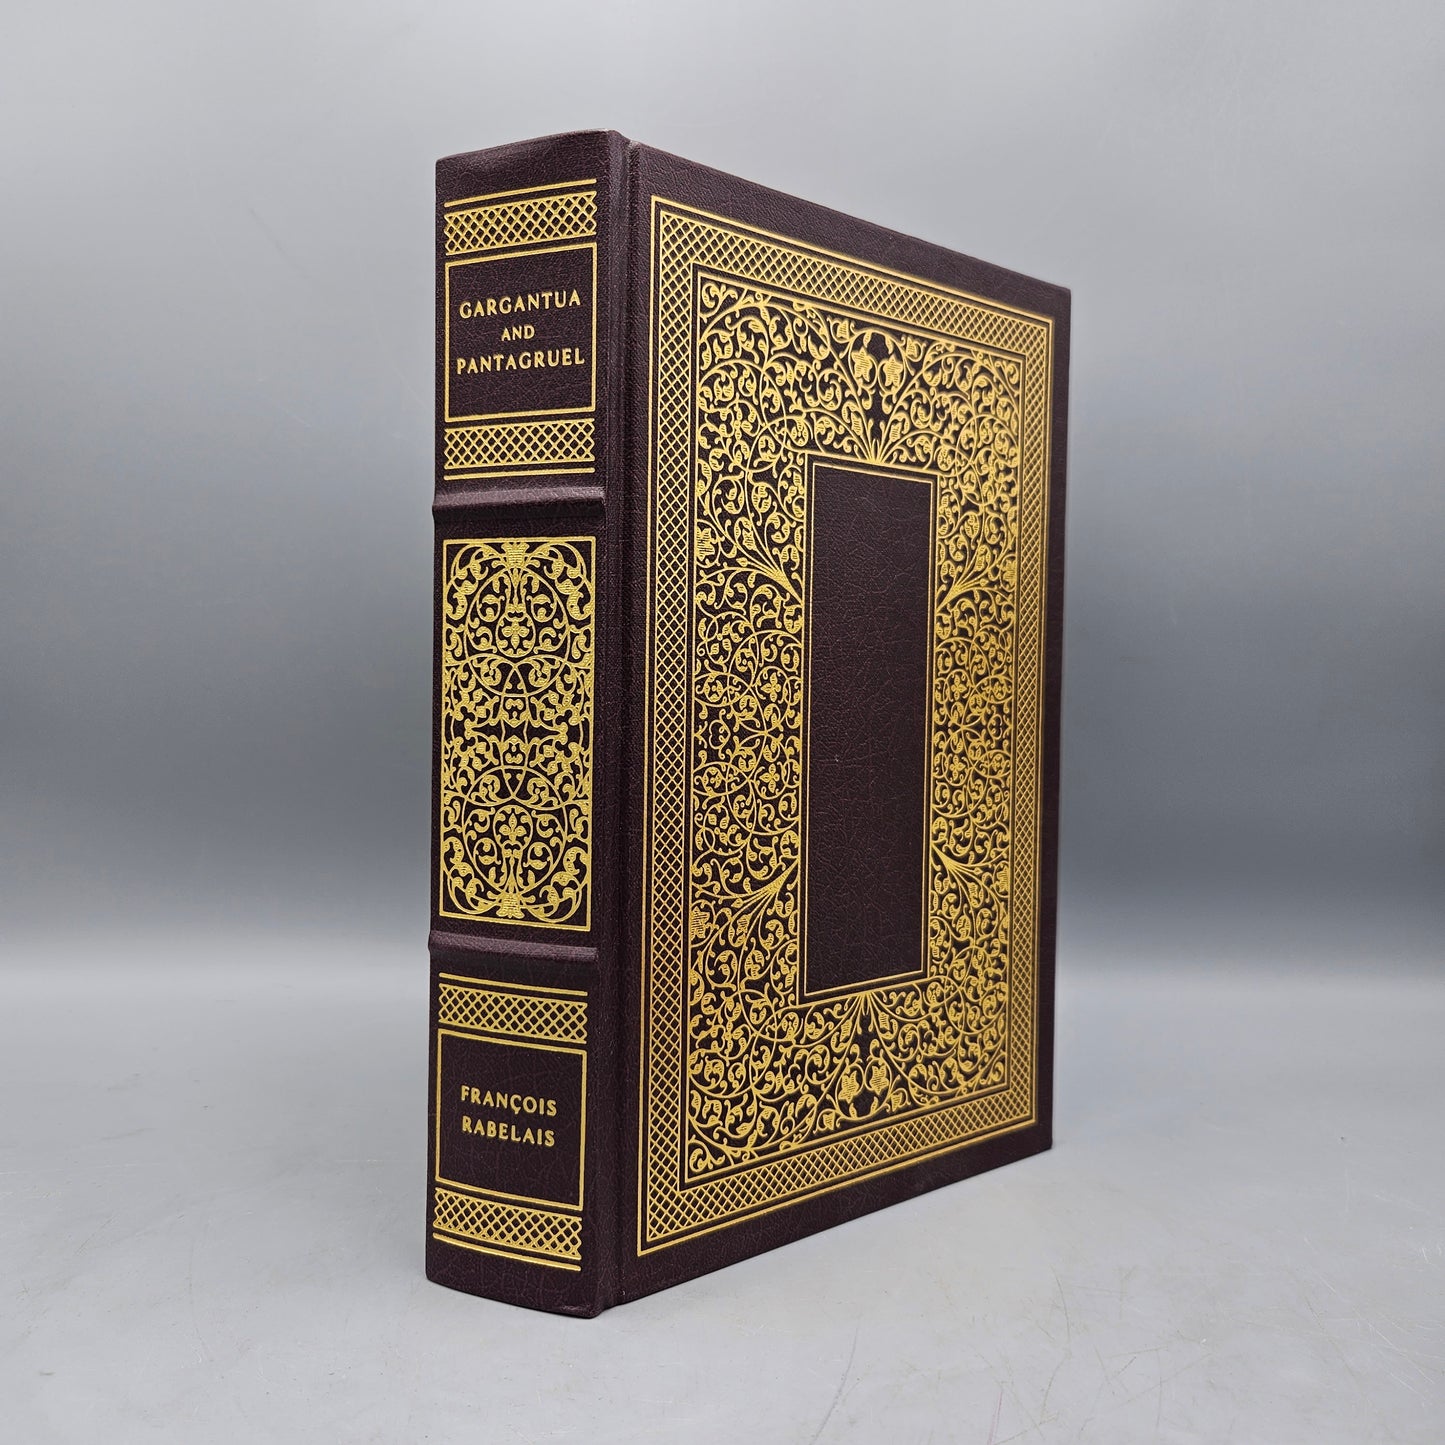 Leatherbound Book - Francois Rabelais "Gargantua and Pantagruel" Franklin Library